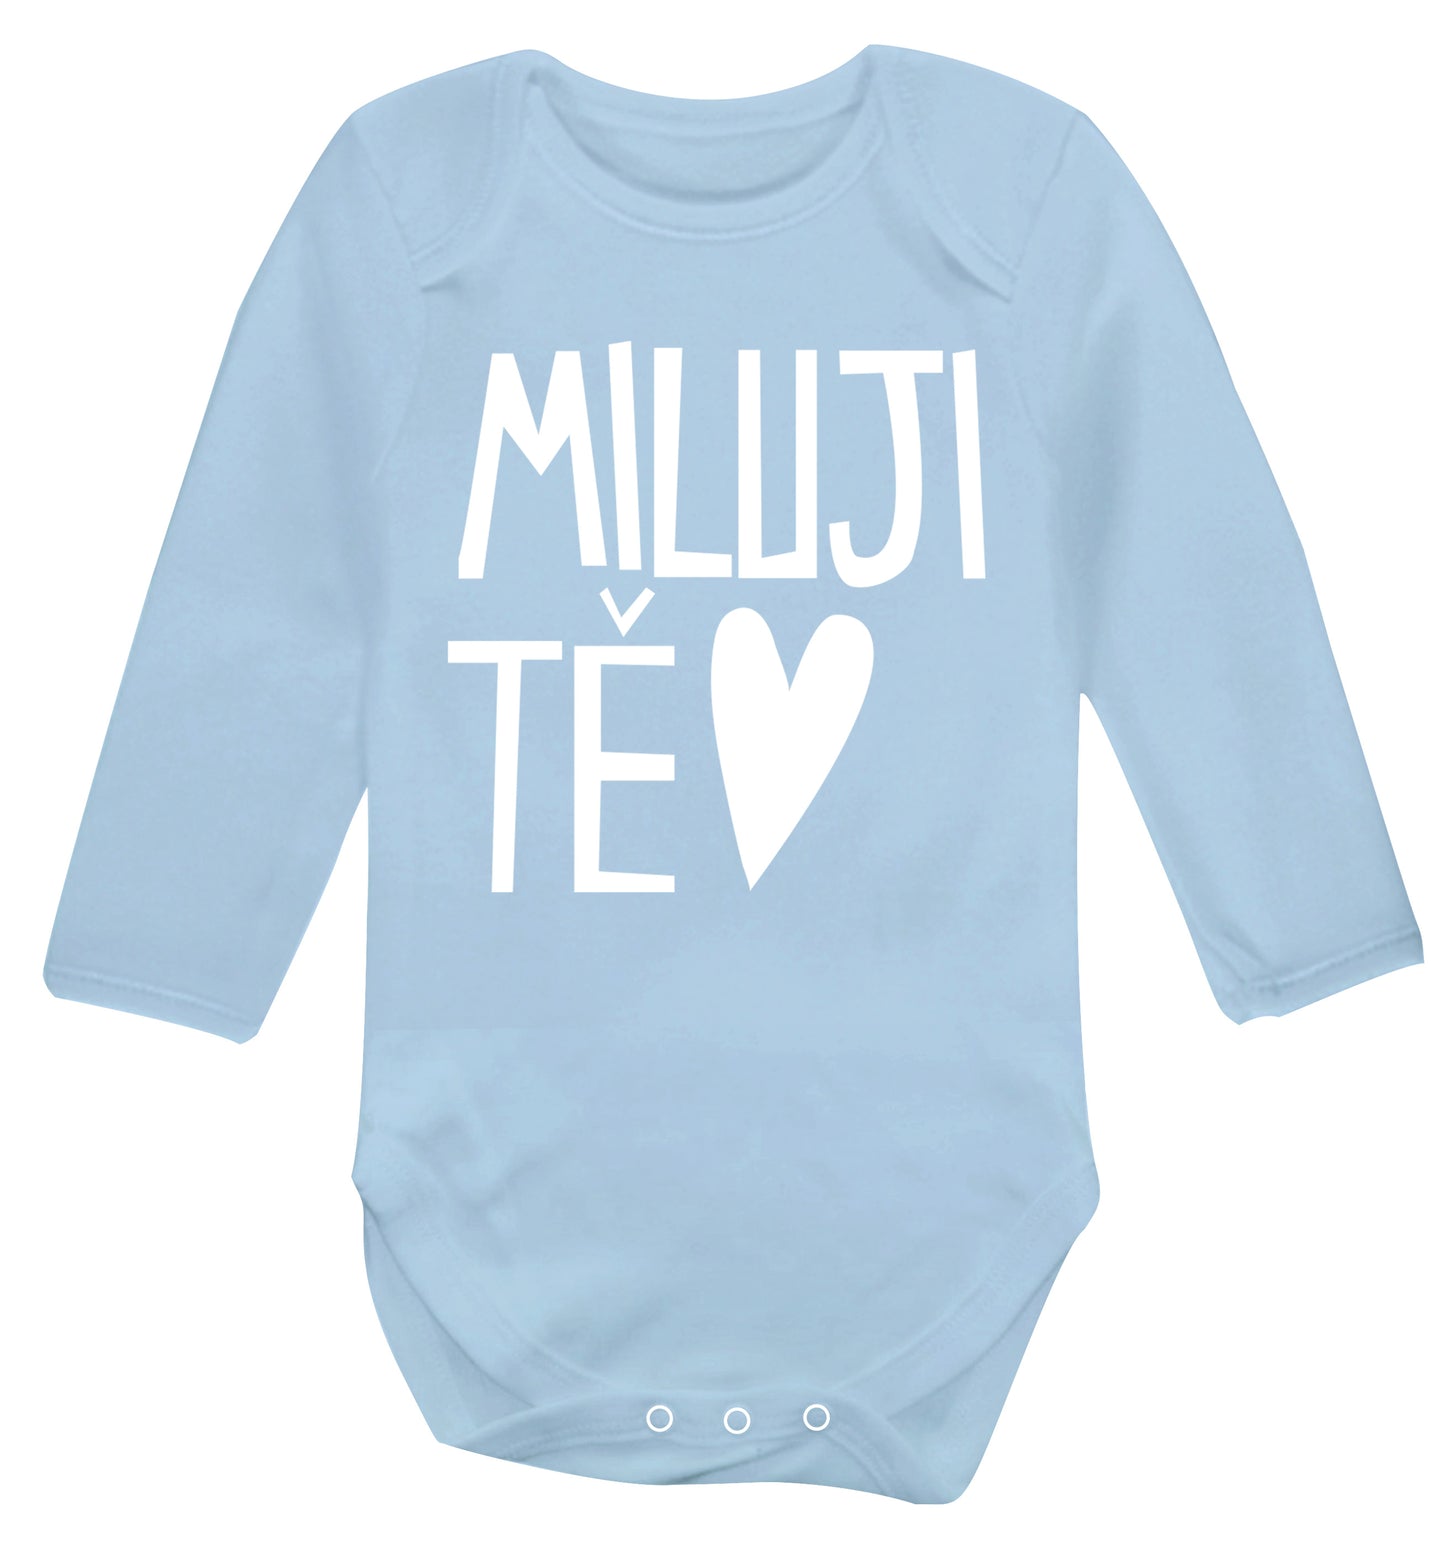 Miluji T_ - I love you Baby Vest long sleeved pale blue 6-12 months